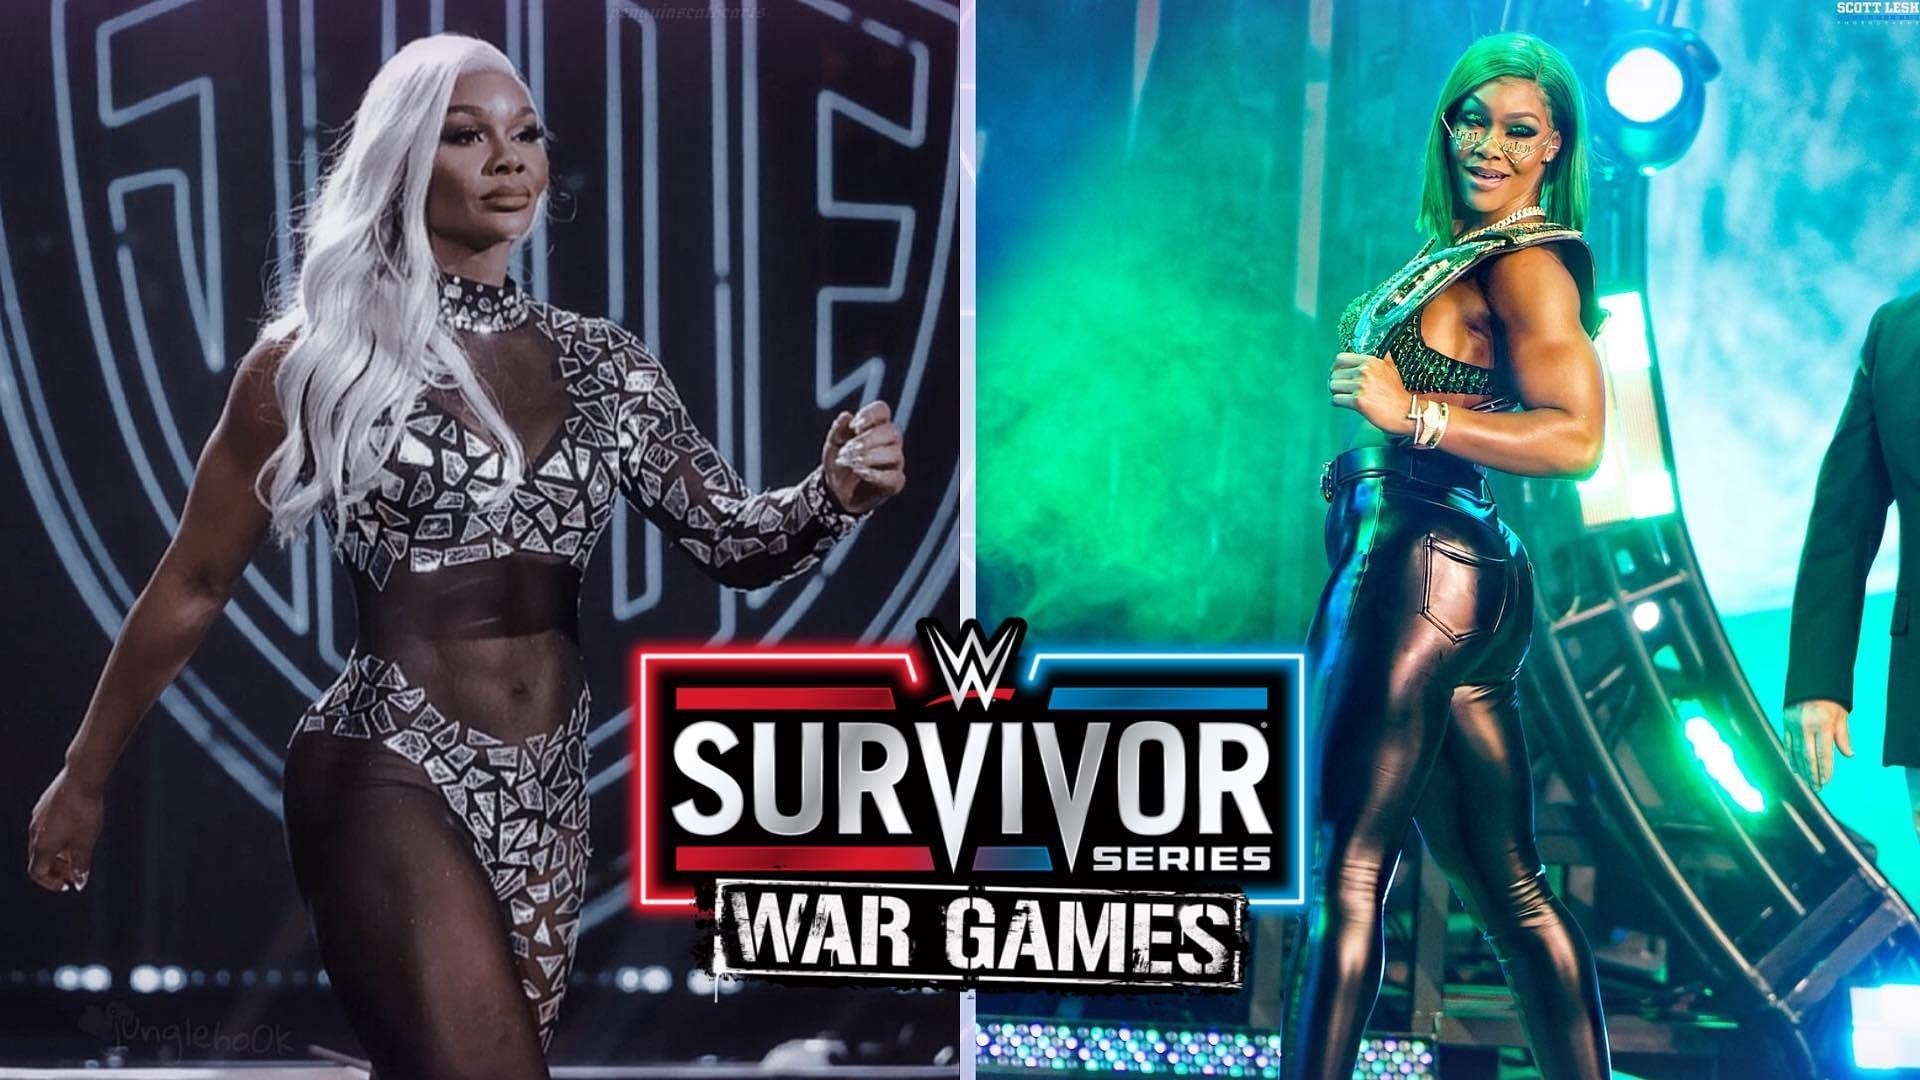 Will Jade Cargill make her in-ring debut at WWE Survivor Series?